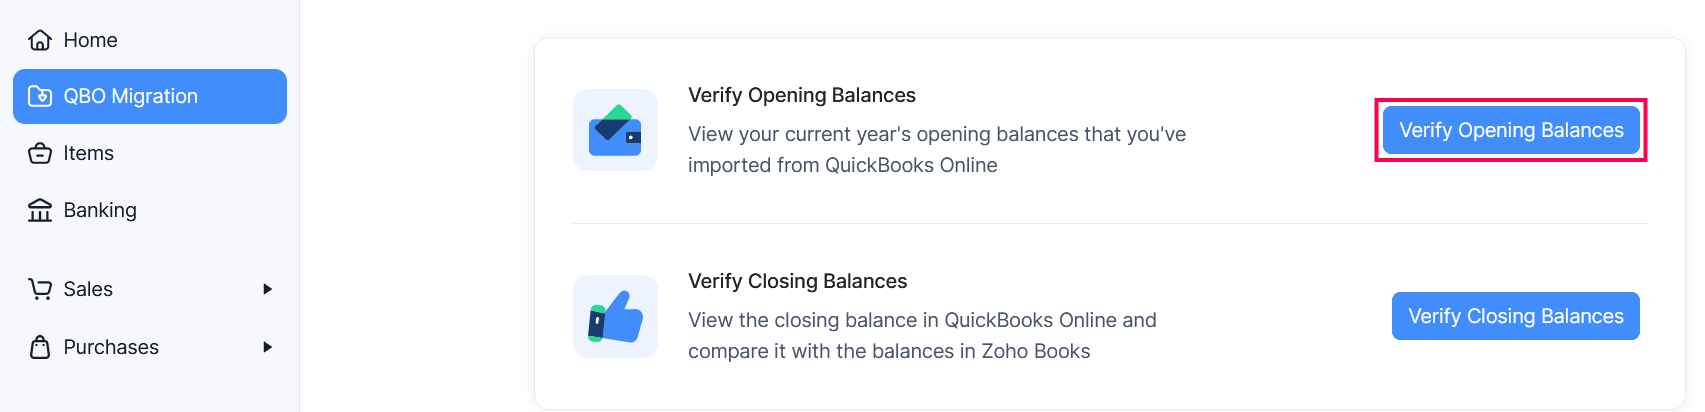 Verify Opening Balances